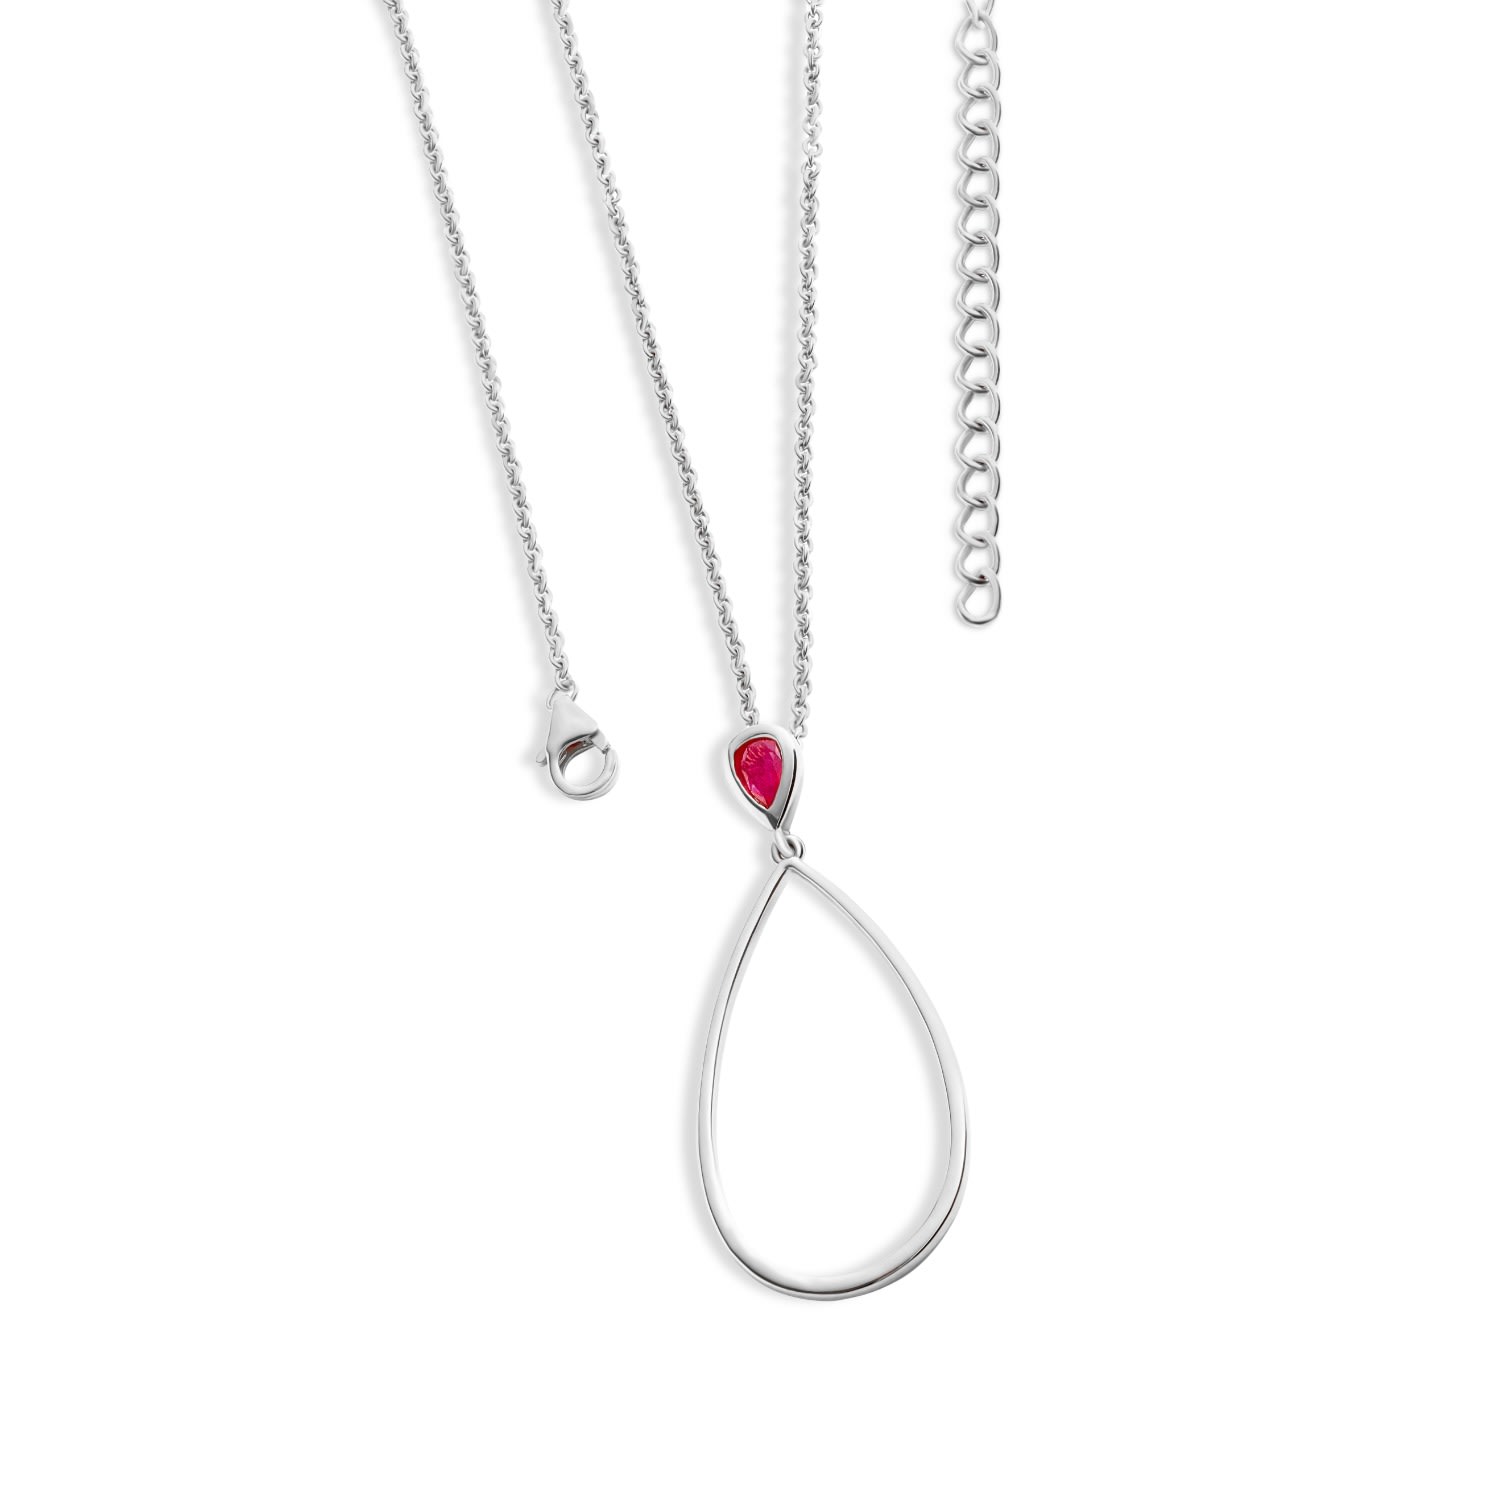 Lucy Quartermaine Women's Silver Long Petal Drop Necklace With Pear Cut Ruby